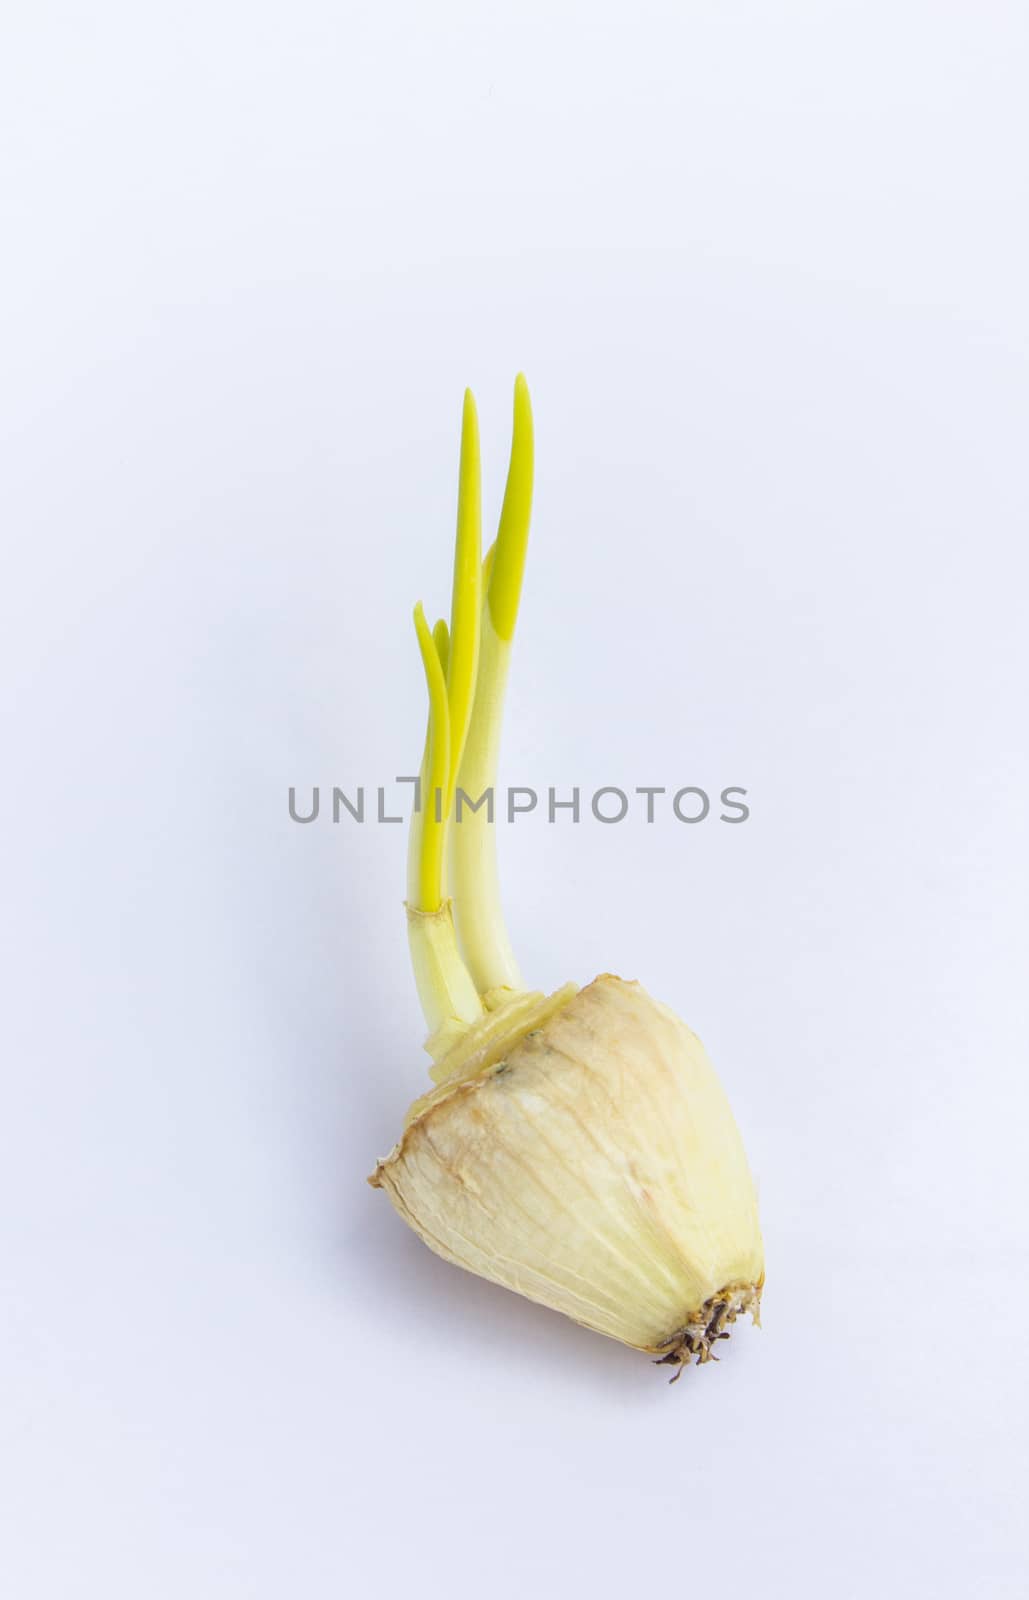 The big head onion